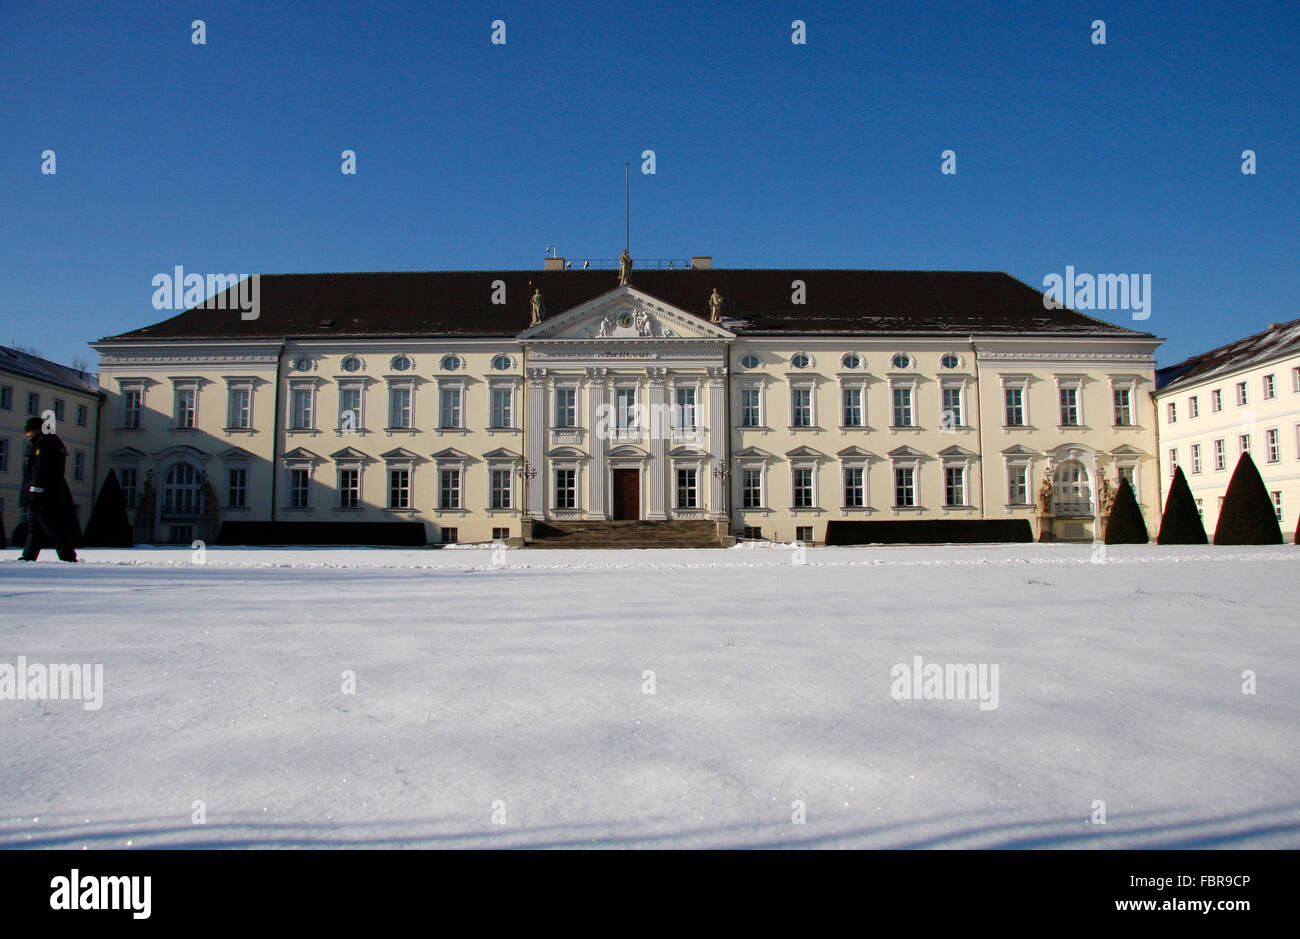 Das Schloss Bellevue, Amtssitz des deutschen Bundespraesidenten, Berlín Tiergarten. Foto de stock